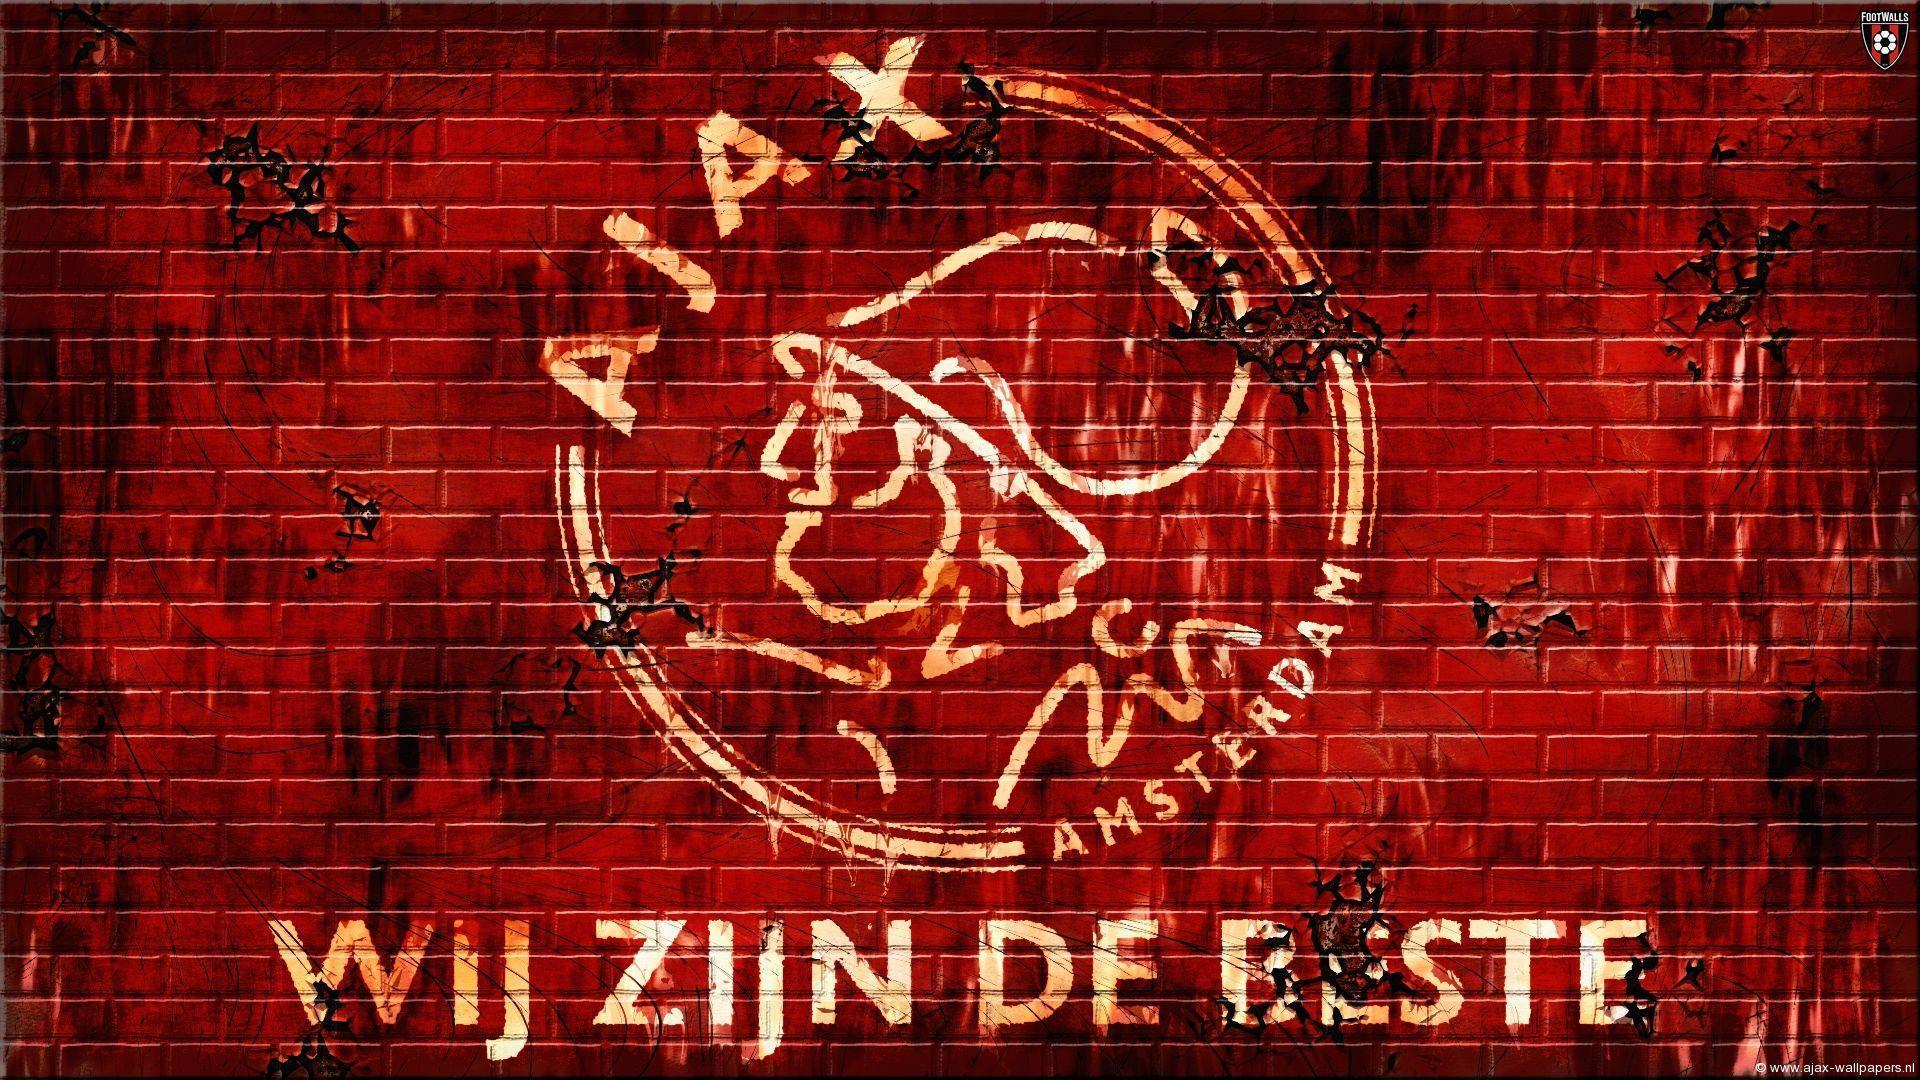 Ajax Wallpaper